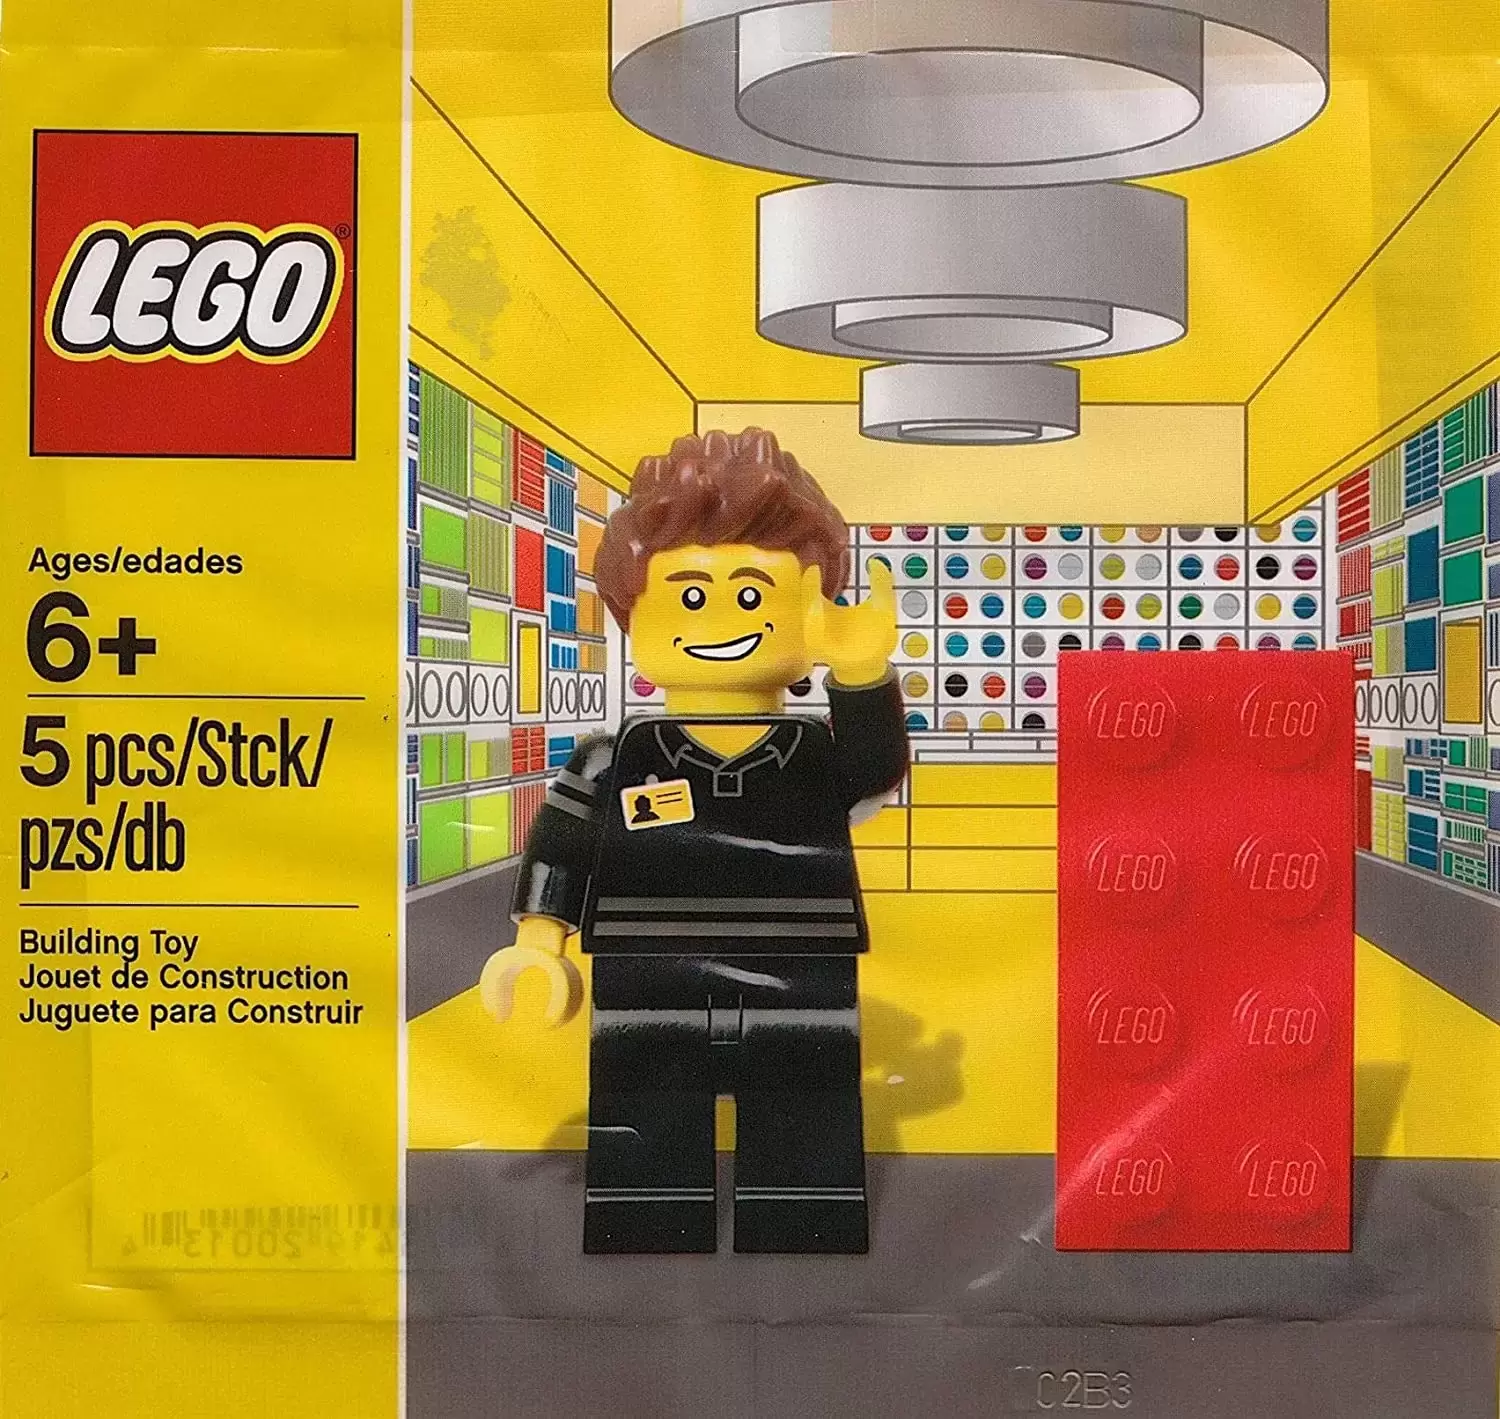 Other LEGO Items - Lego Shop Employee